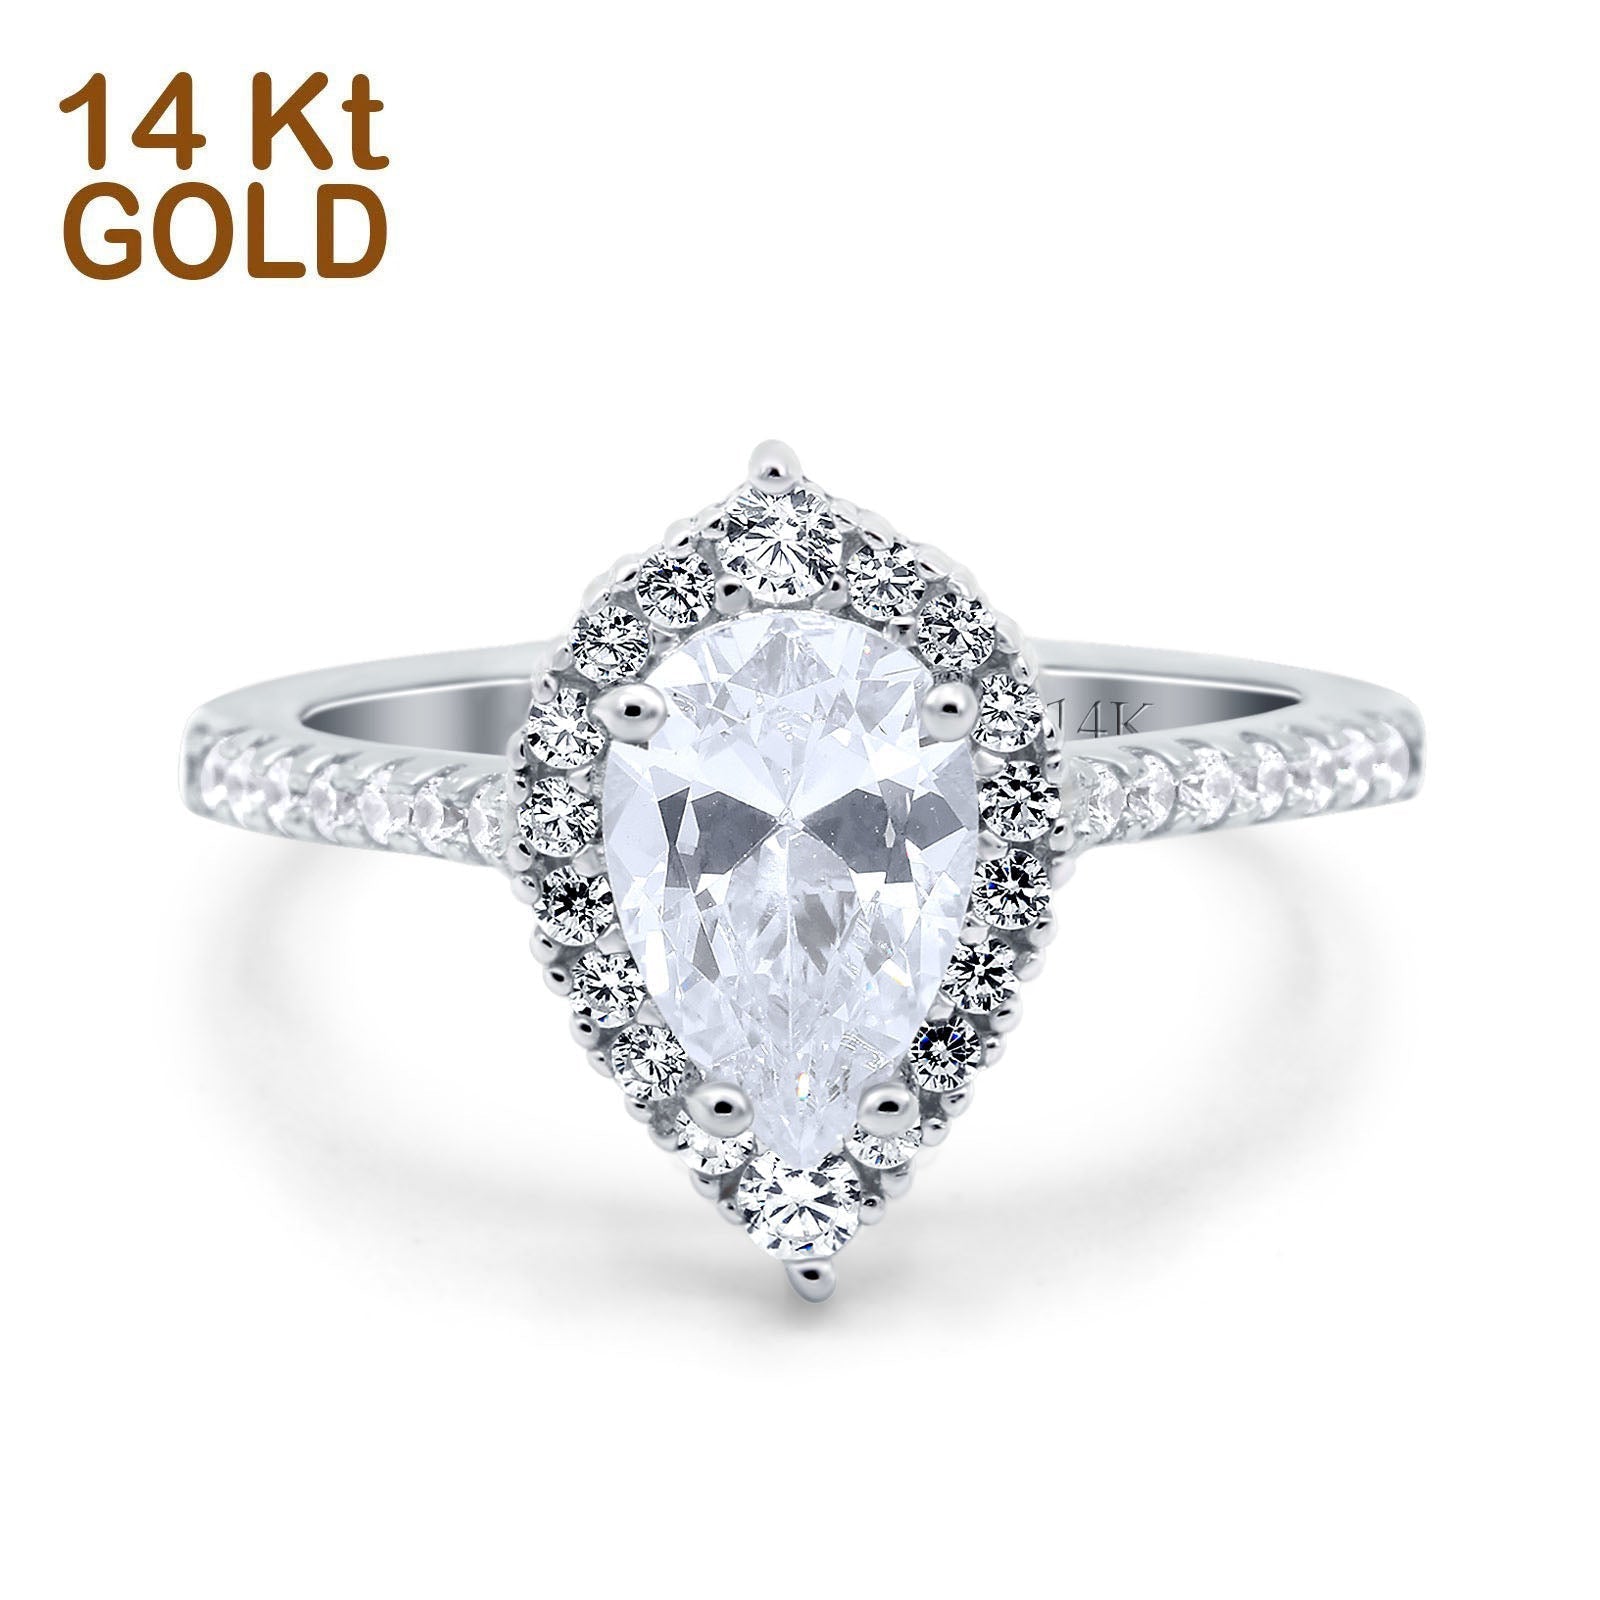 14K Gold Teardrop Pear Shape Simulated Cubic Zirconia Art Deco Bridal Wedding Engagement Ring